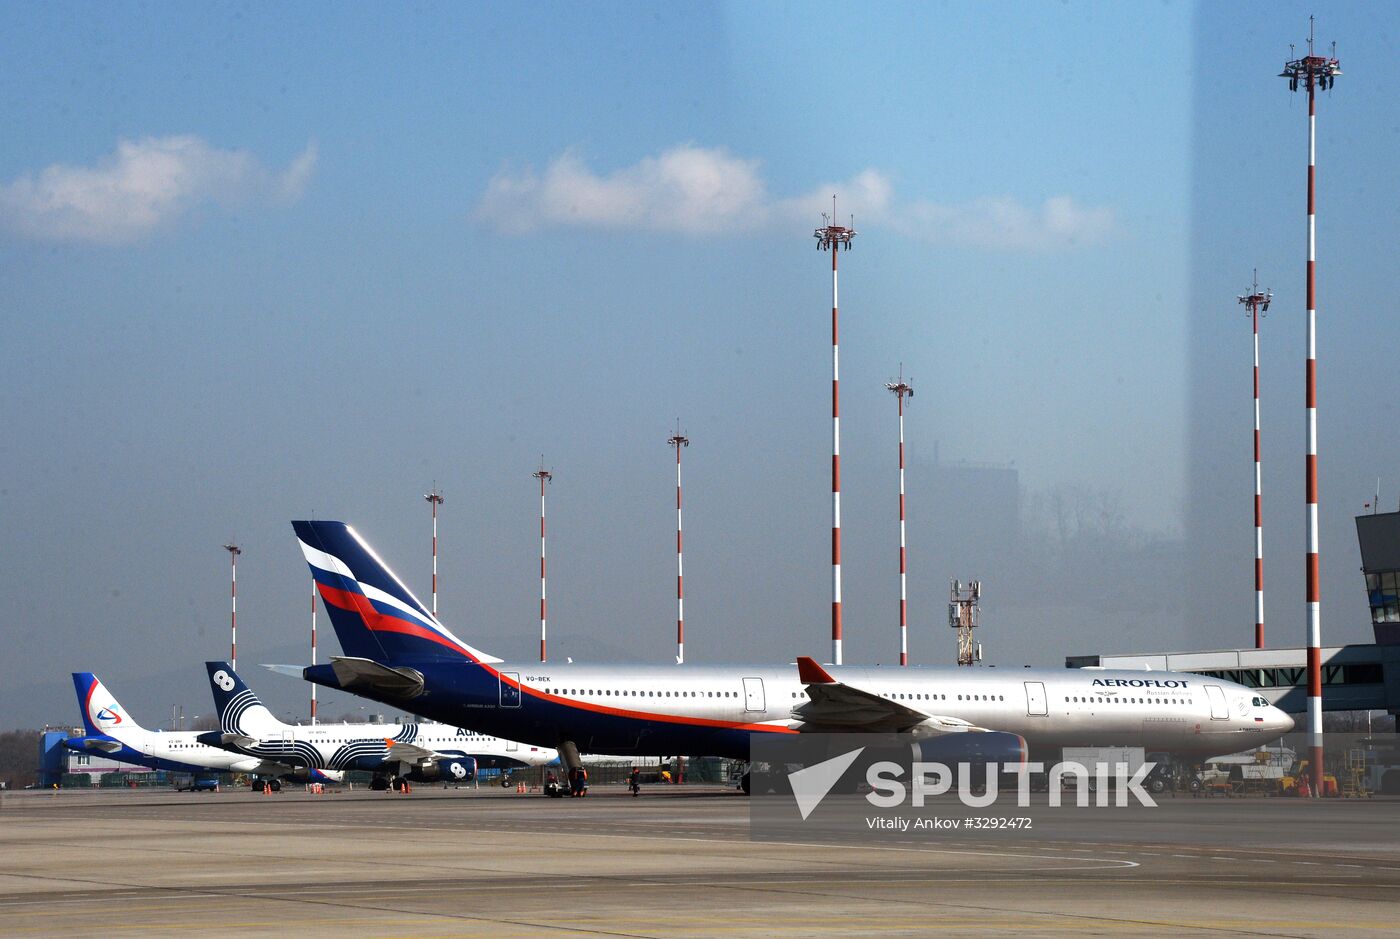 Vladivostok international airport